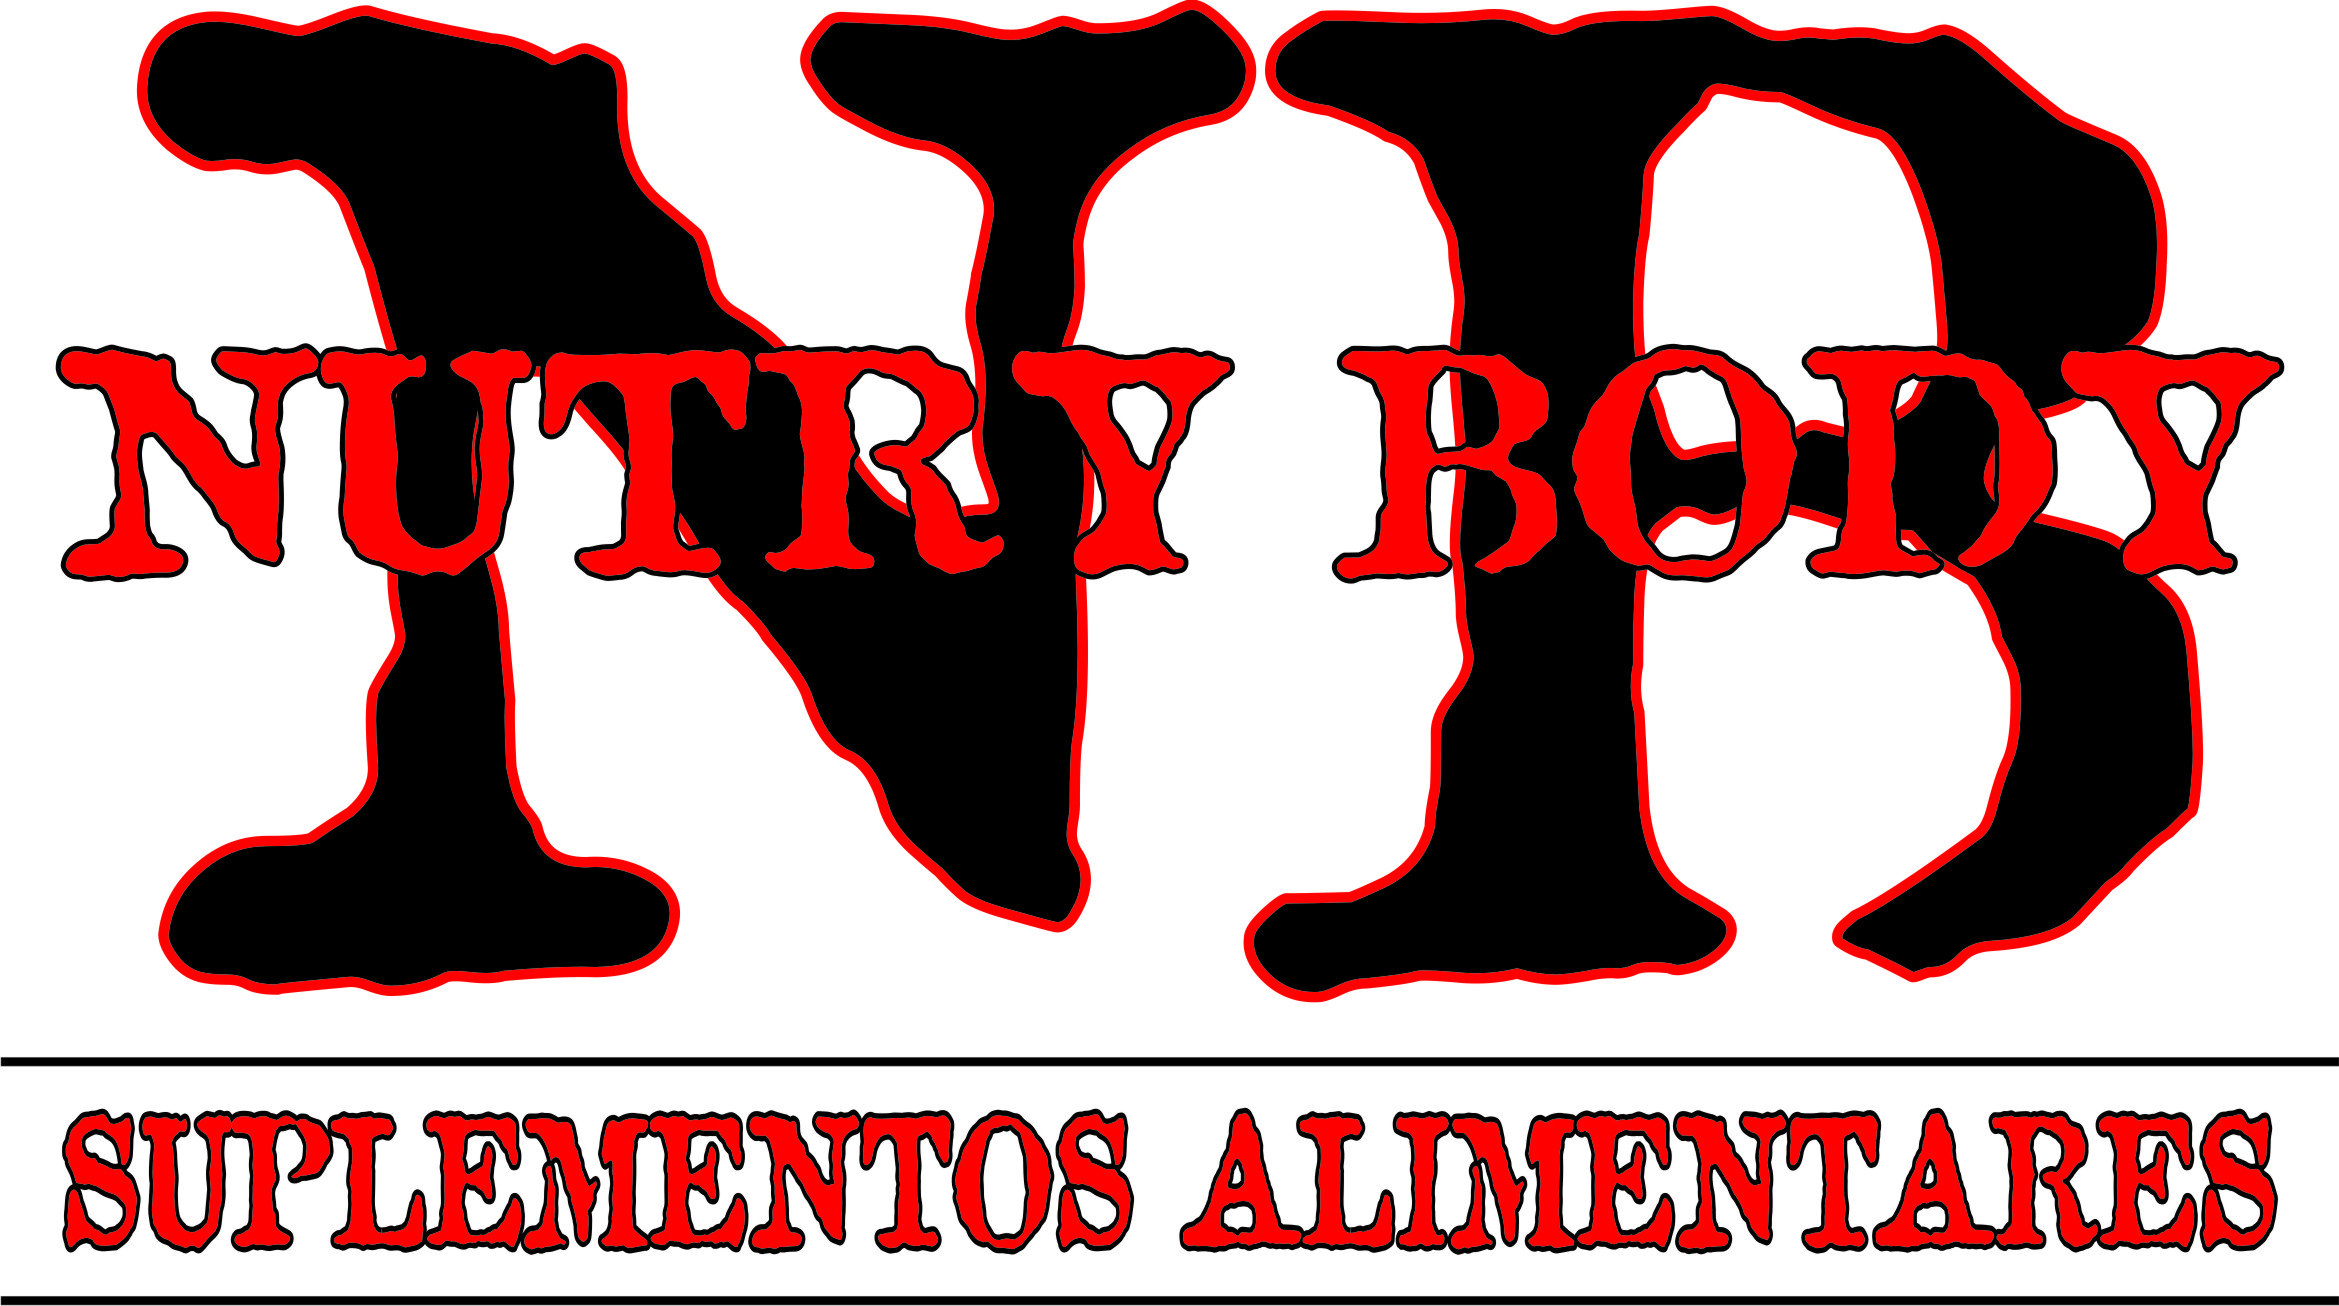 NUTRYBODY SUPLEMENTOS ALIMENTARES logo